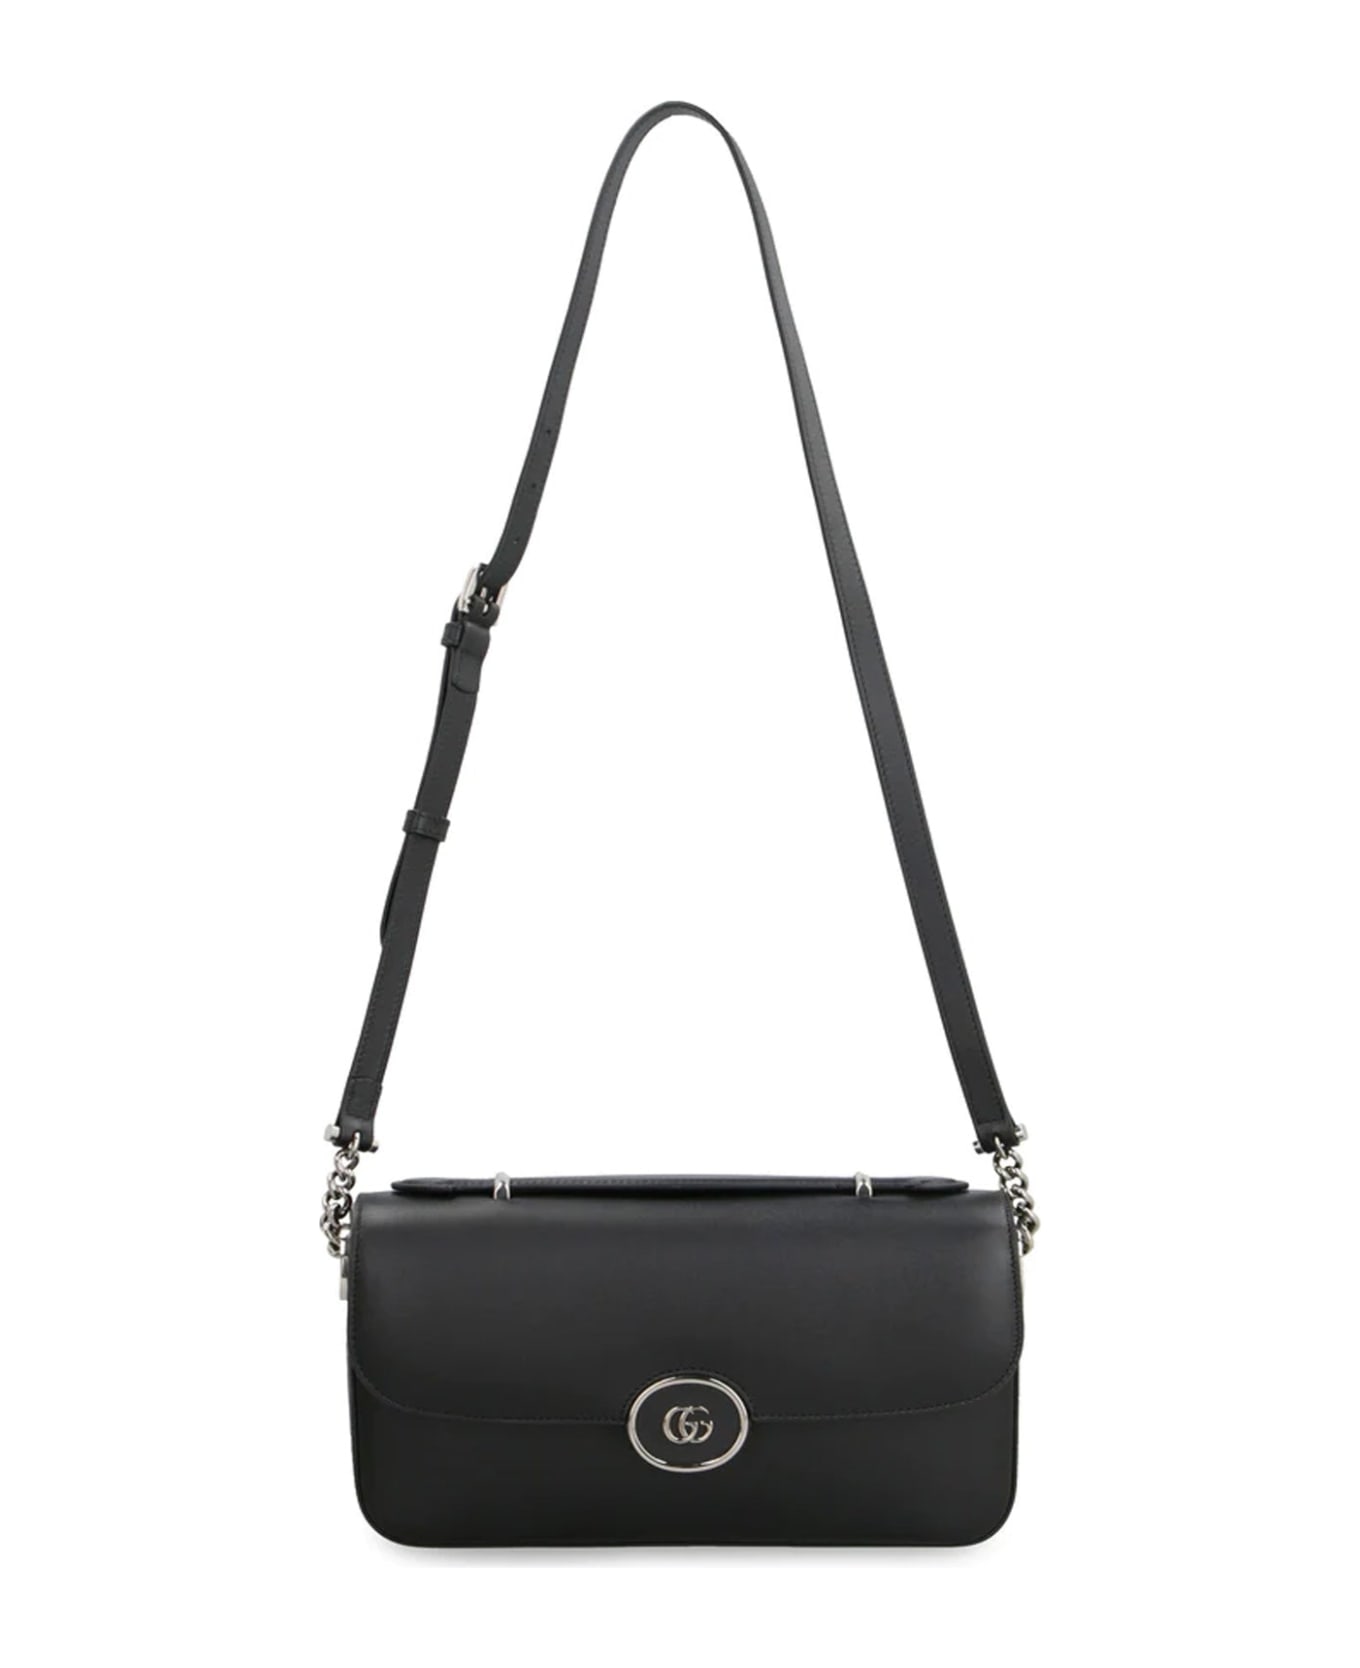 Gucci Petite Shoulder Bag - Black